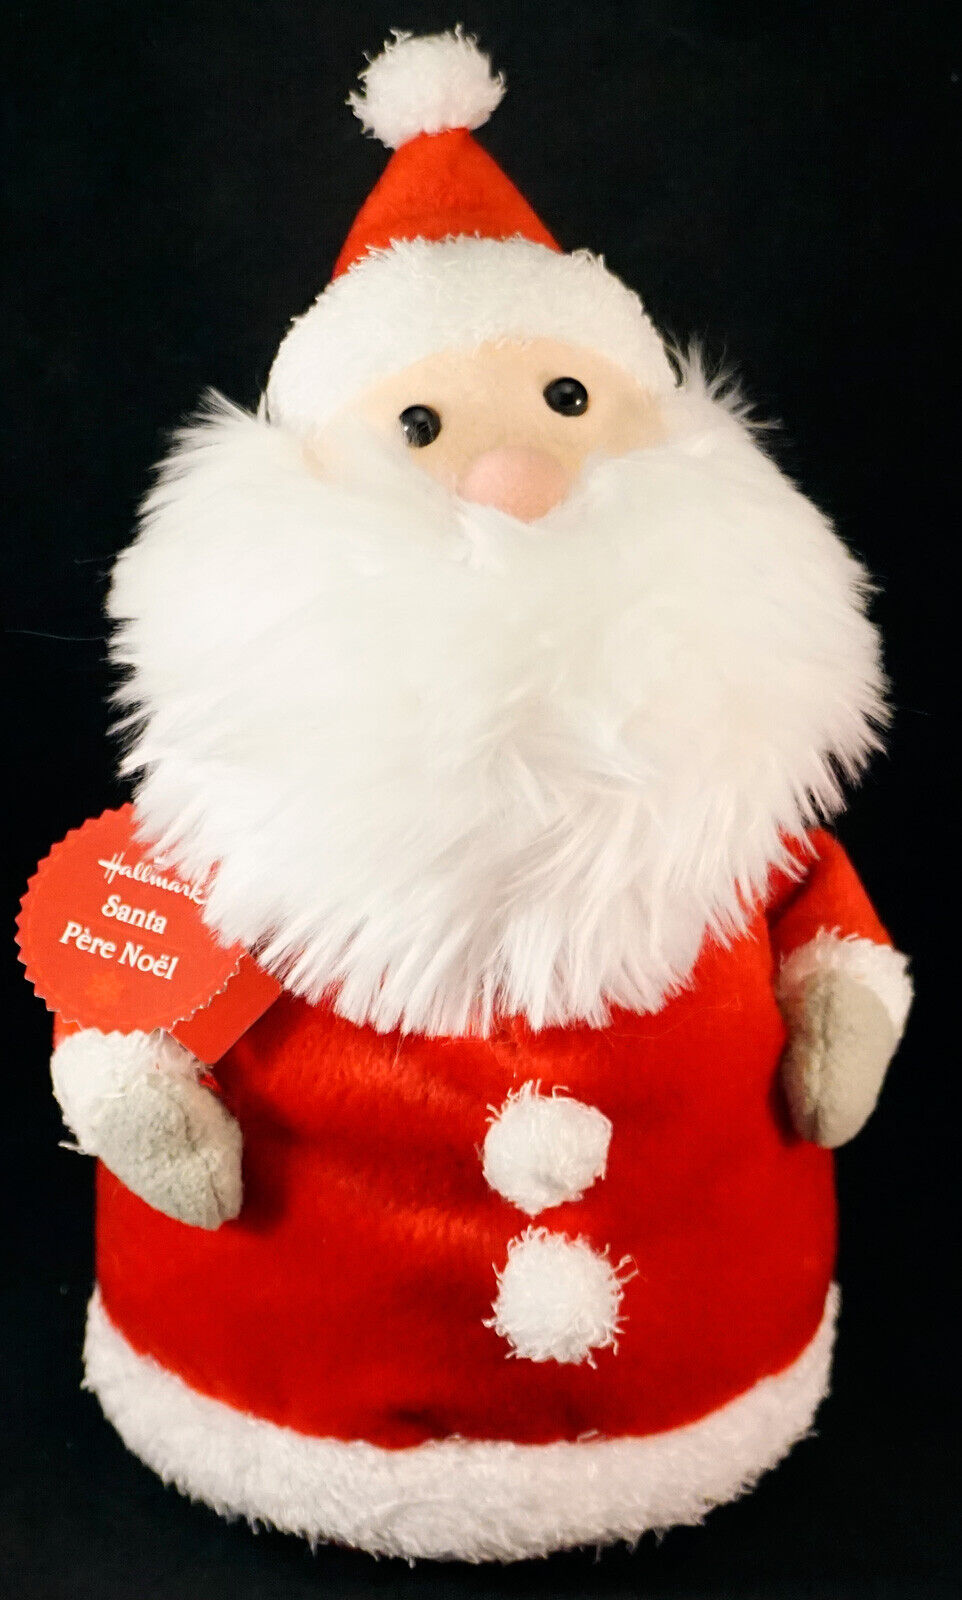 Hallmark Pere Noel (Father Christmas) Santa Claus Plush Figurine with Tags